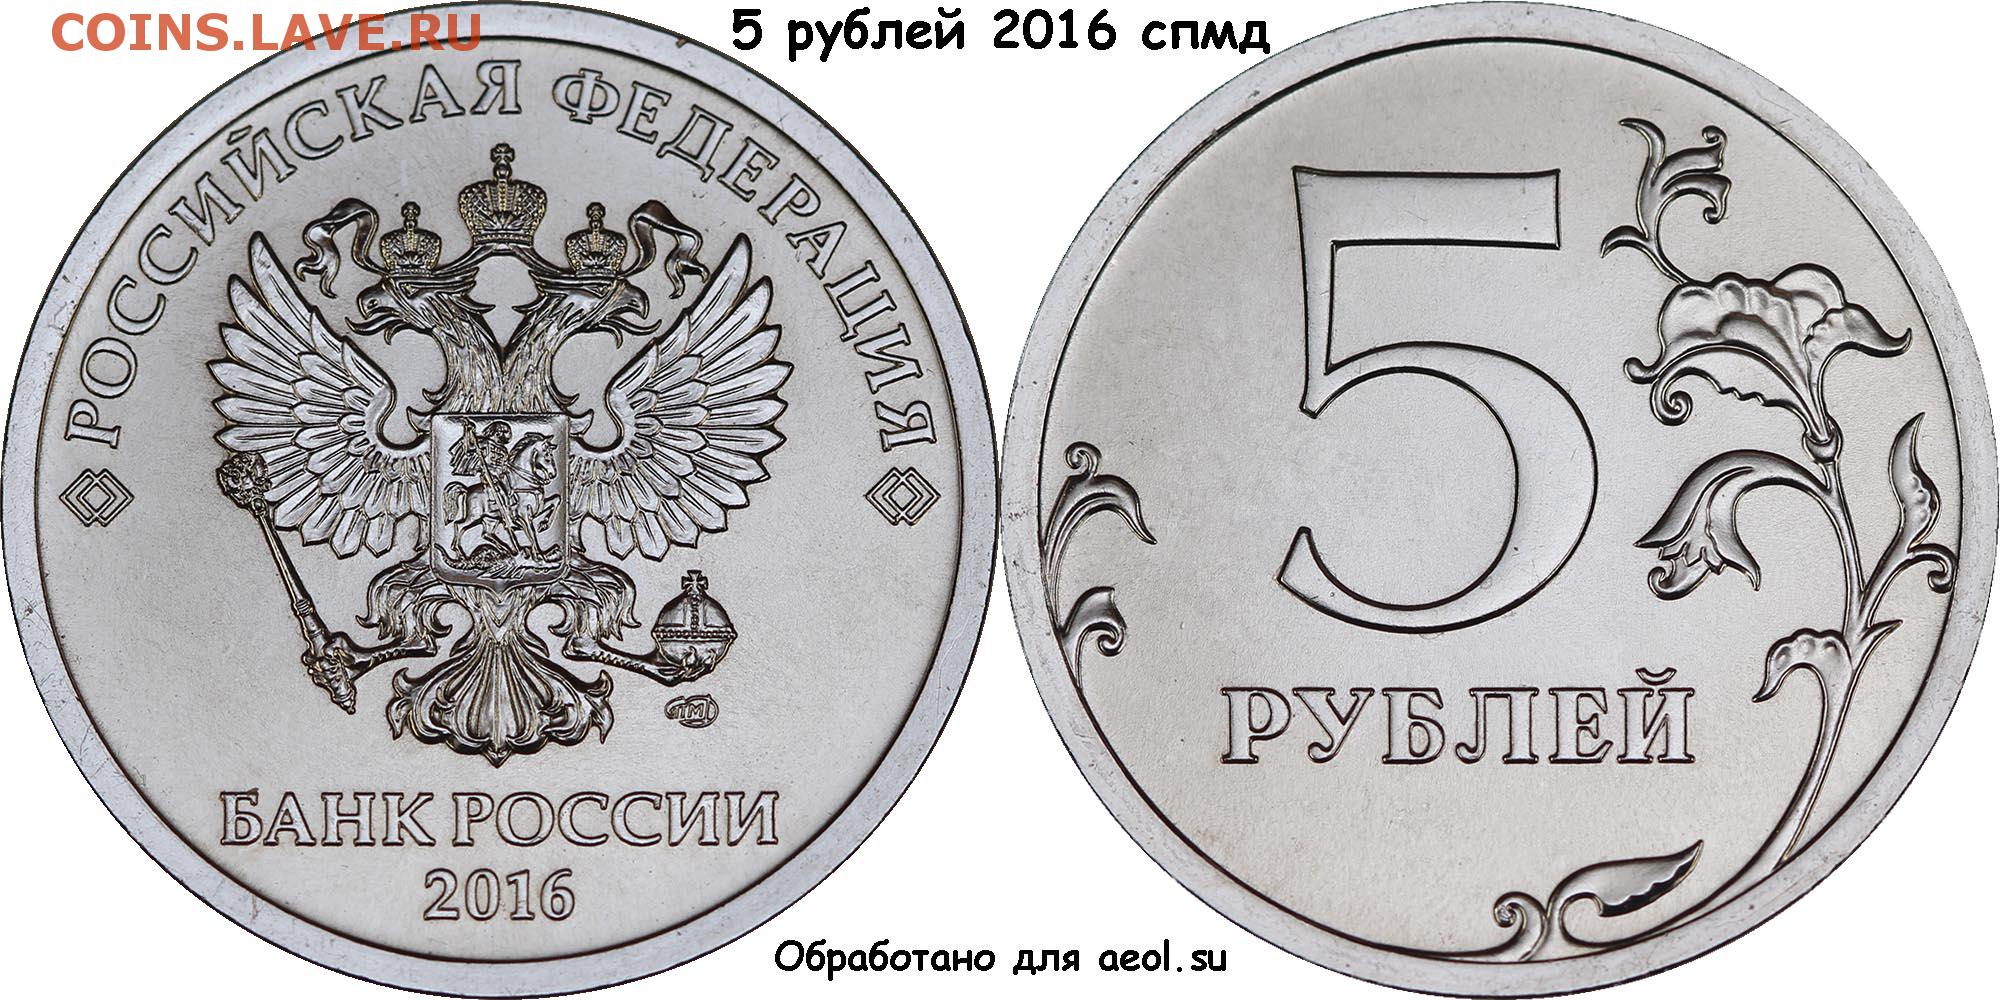 1 тин в рублях. Монета 2 рубля 2016 года СПМД. 5 Рублей 2016 года СПМД. Монета 1 рубль реверс и Аверс. Монета 1 рубль 2016 года СПМД.